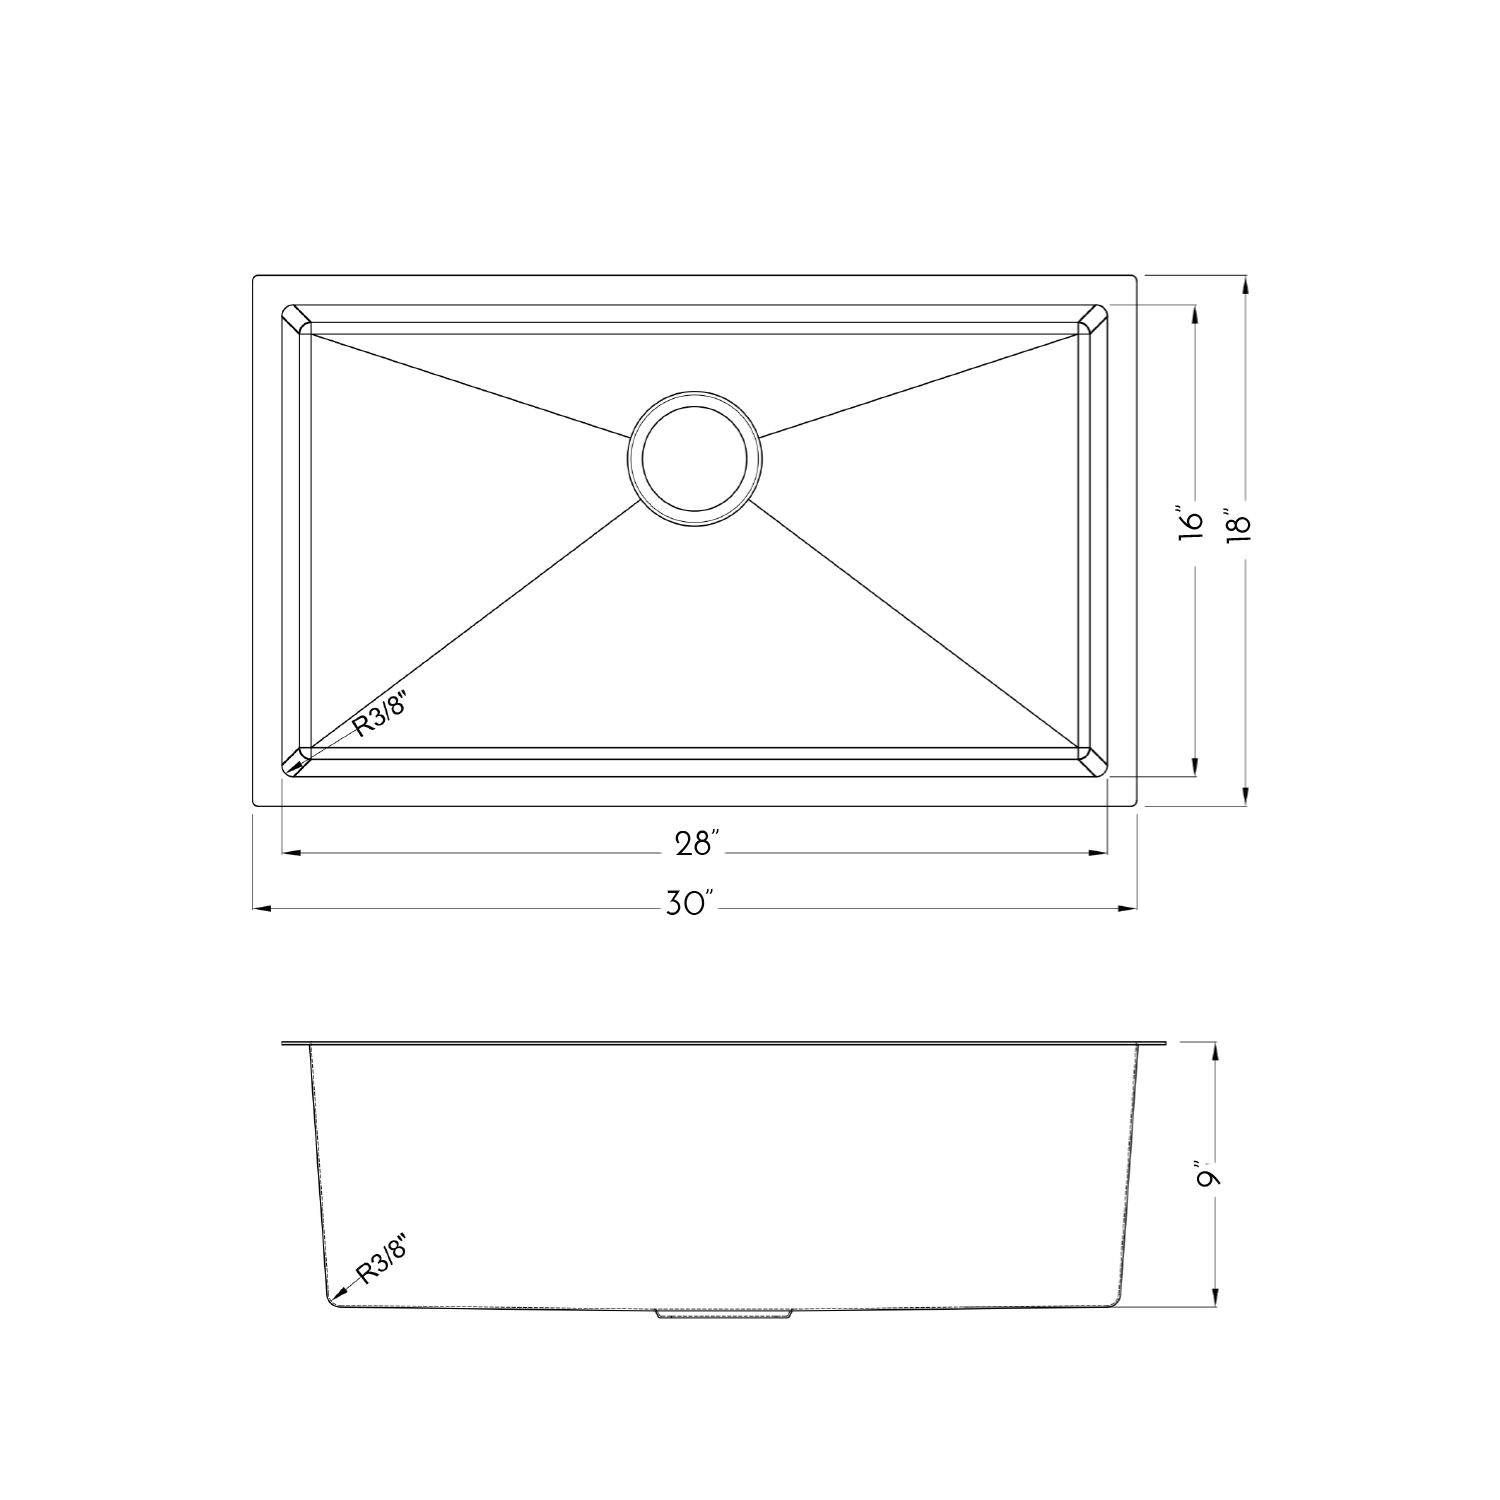 DAX Single Bowl Undermount Kitchen Sink 30" x 18" - R10 - 18G.  No Accessories Included (DX-T3018-R10-X)